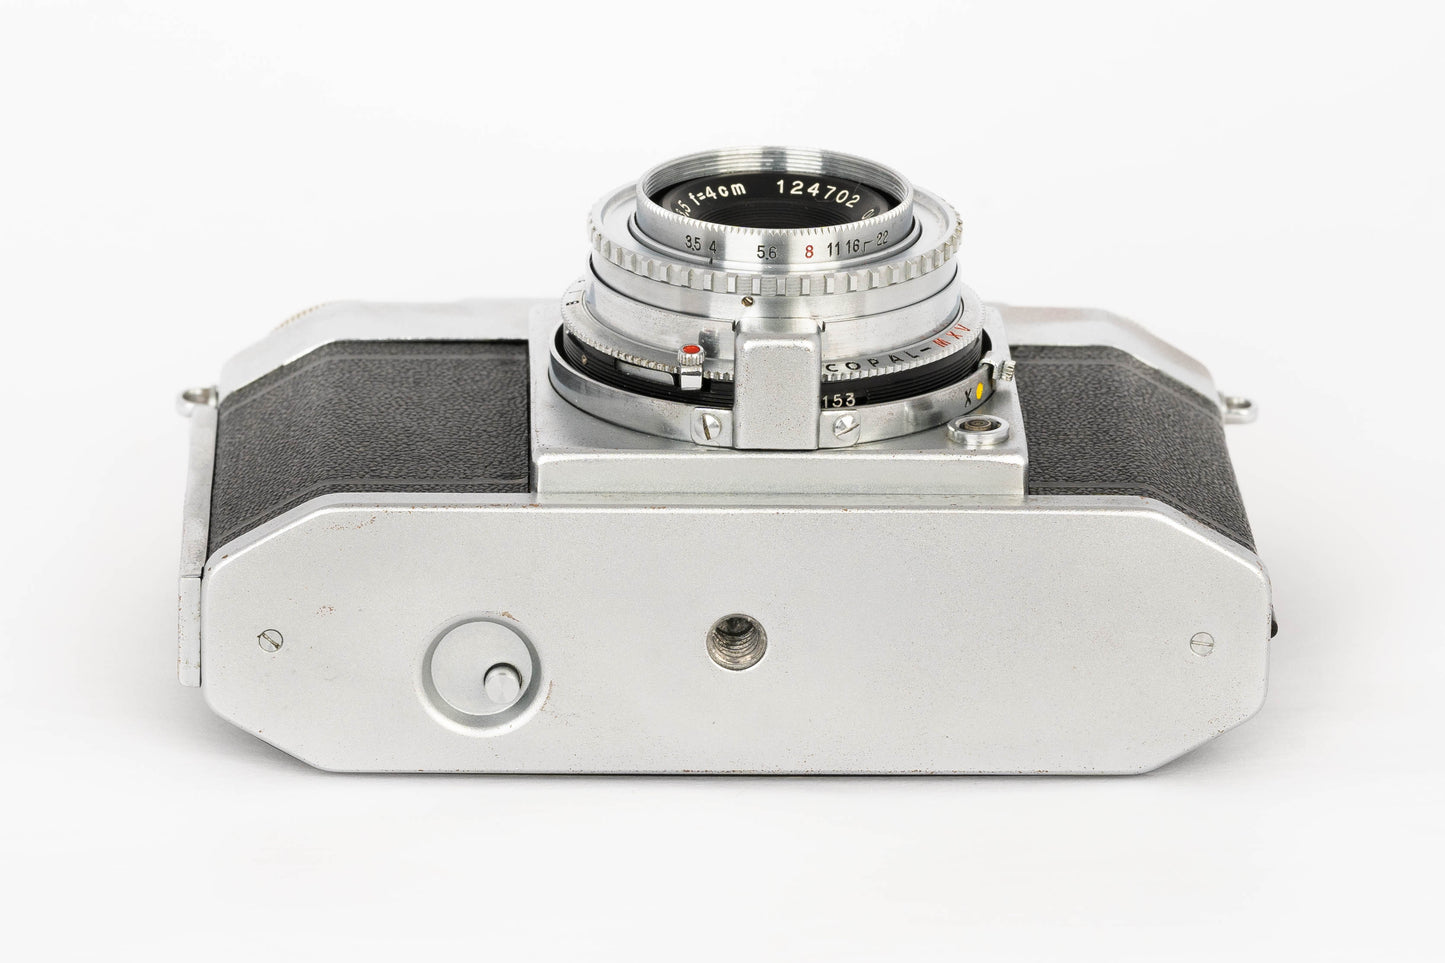 Olympus 35 Film Rangefinder Camera D.Zuiko FC 4cm f/3.5 from JAPAN